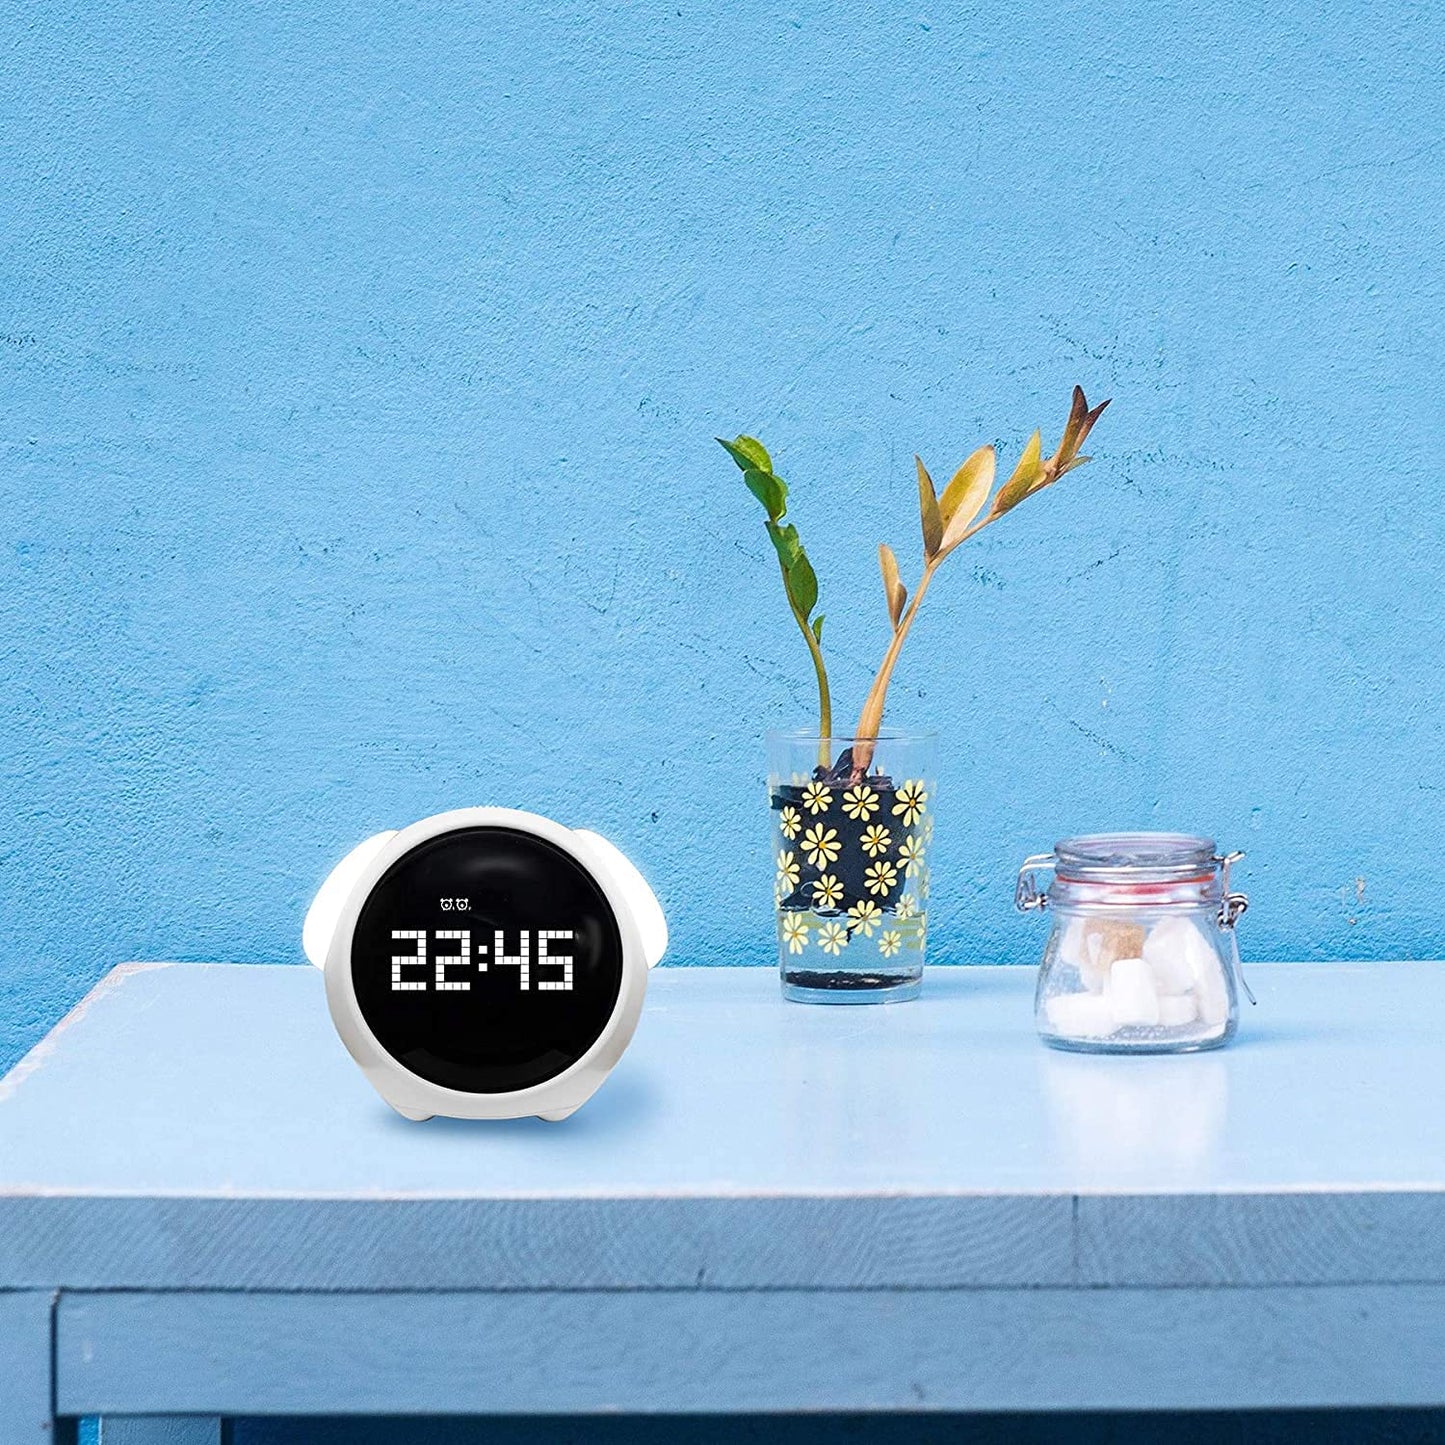 Emoji Digital Alarm Clock